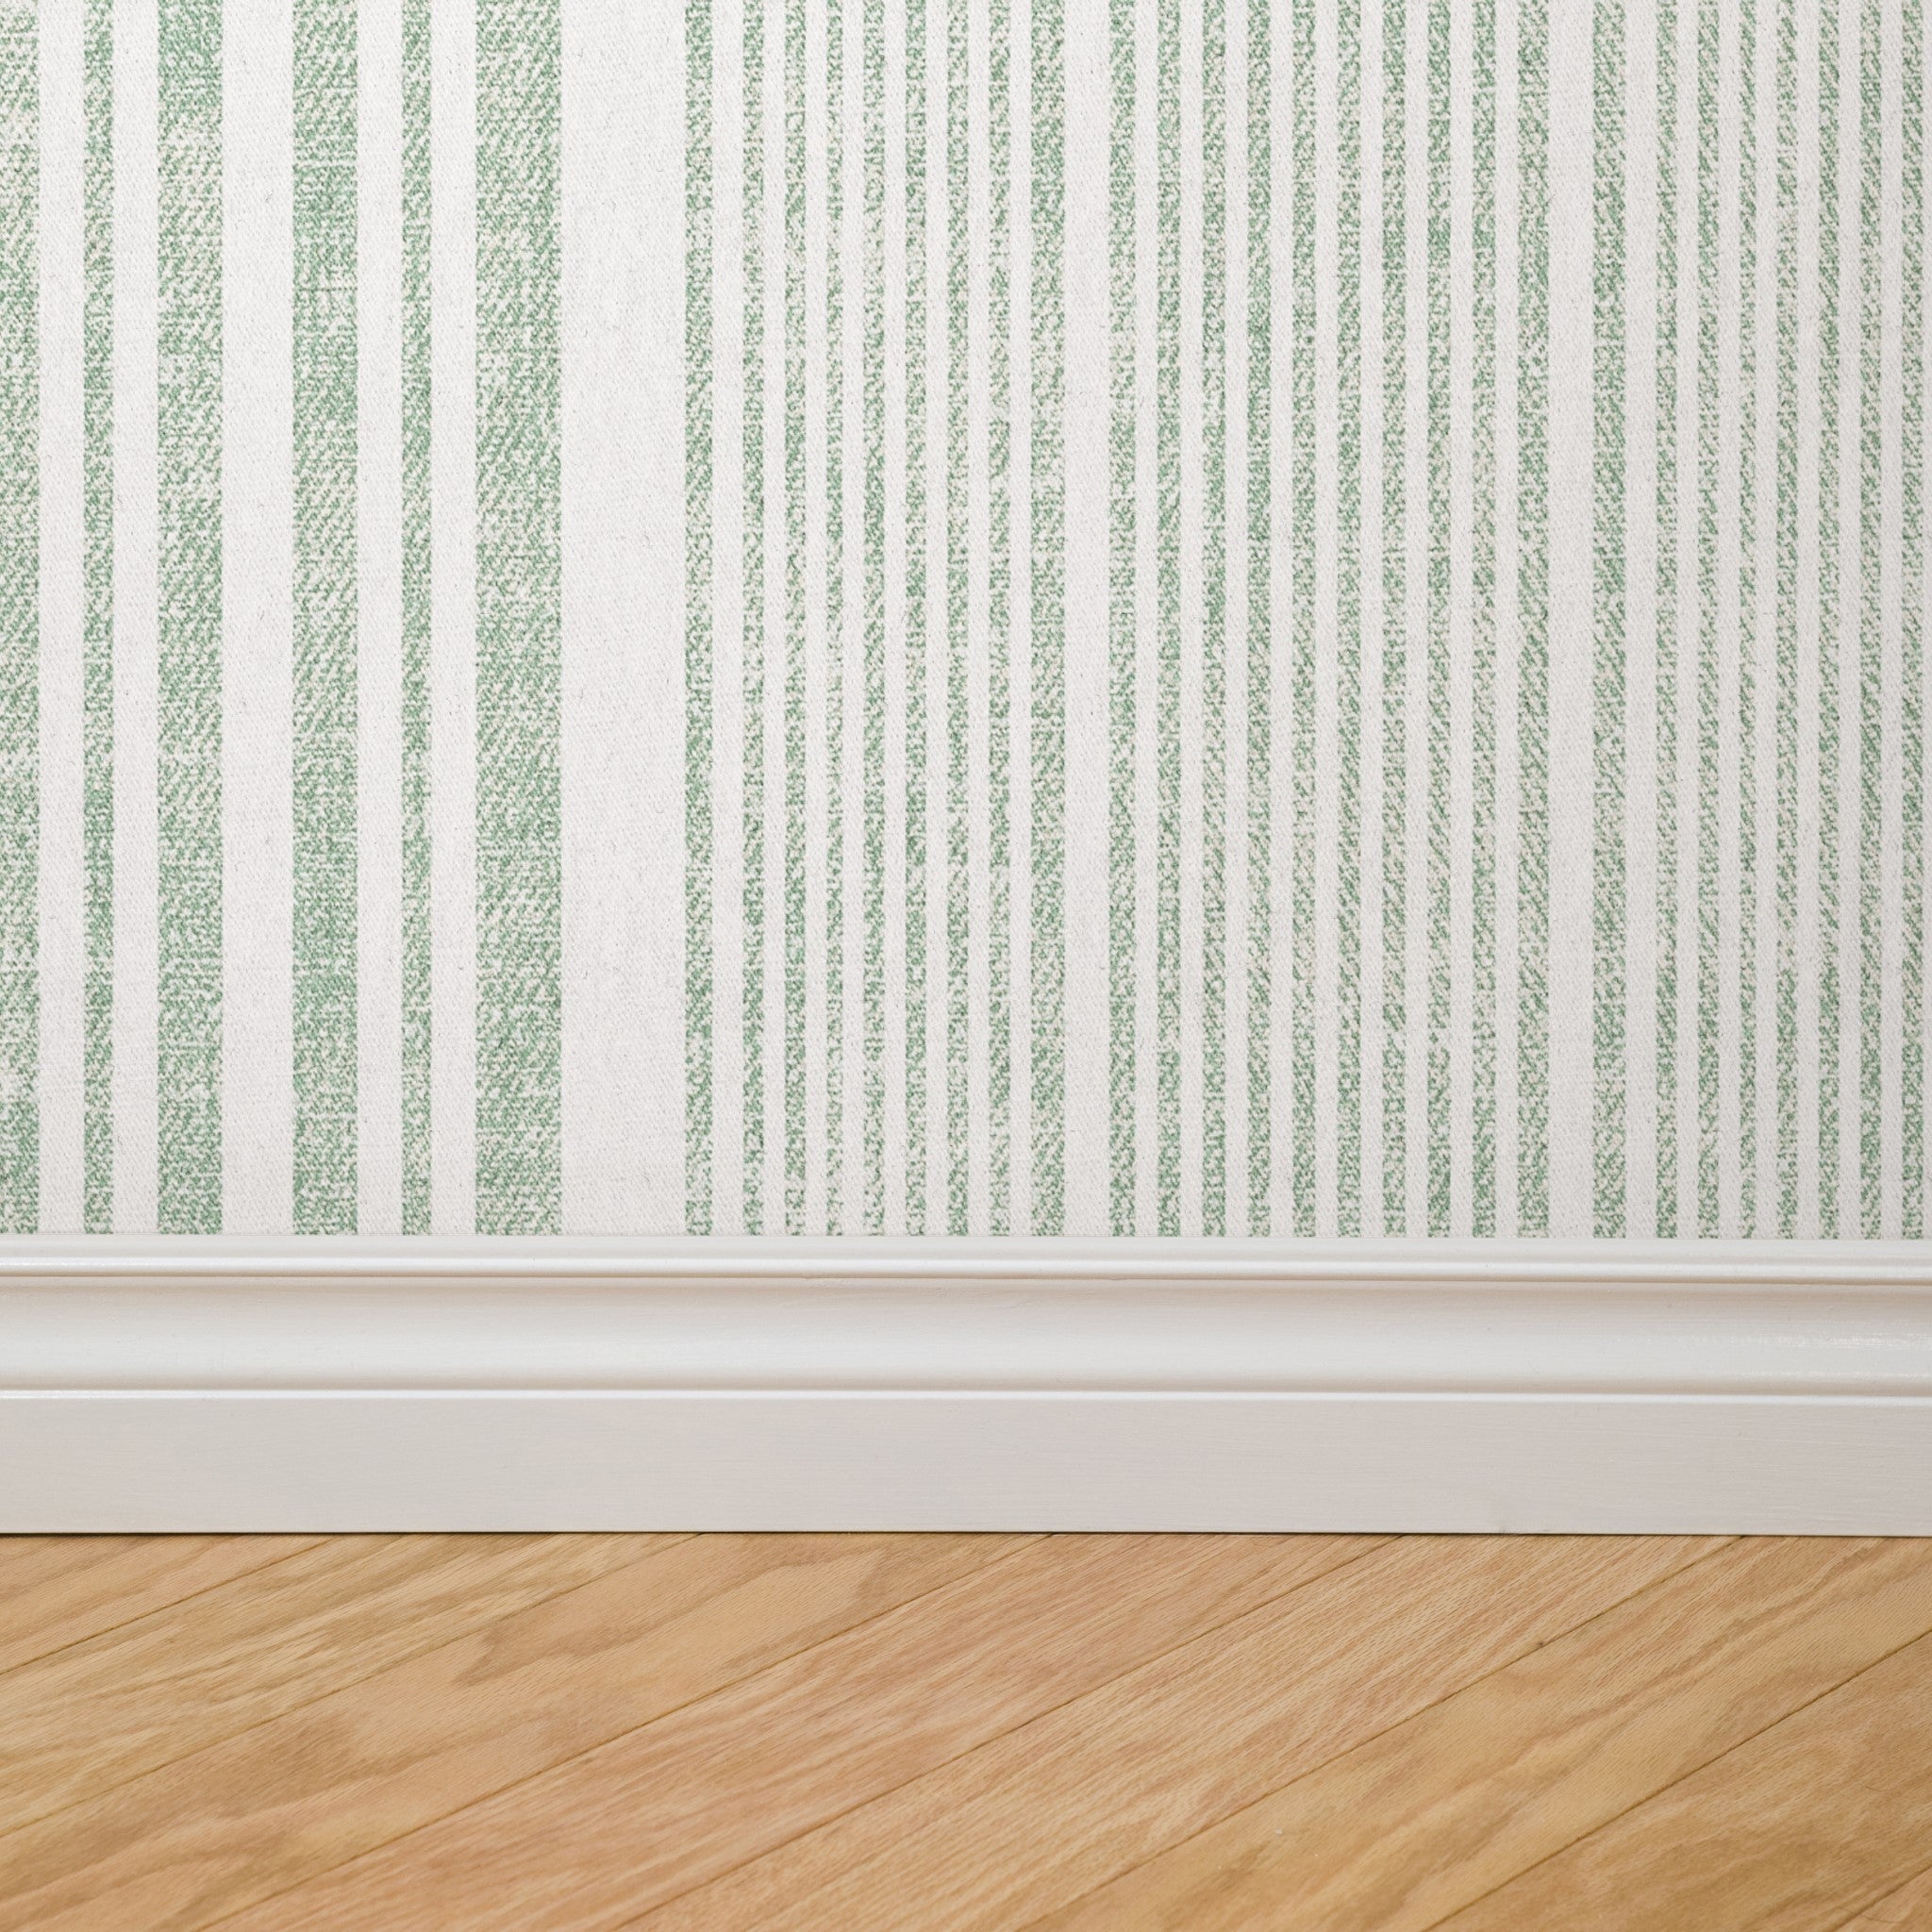 "Wall Blush Small Town Wallpaper in a modern living room, highlighting elegant green vertical stripe pattern."